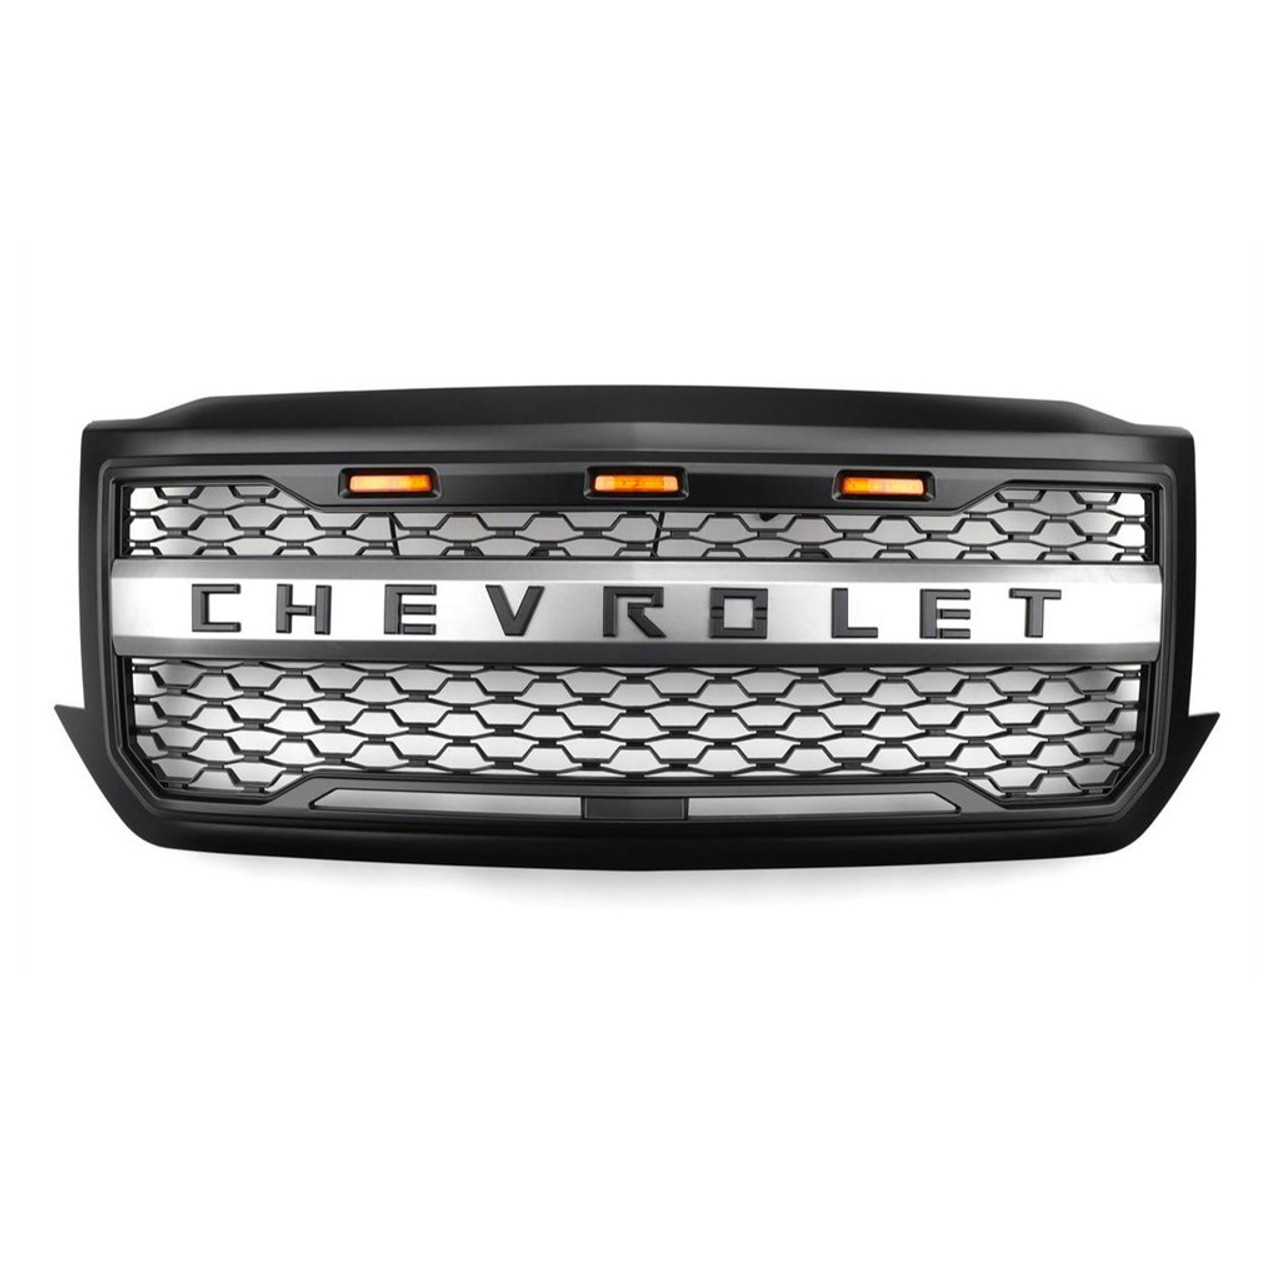 LED Front Grille For Chevrolet Silverado 1500 2016 2017 2018 Black